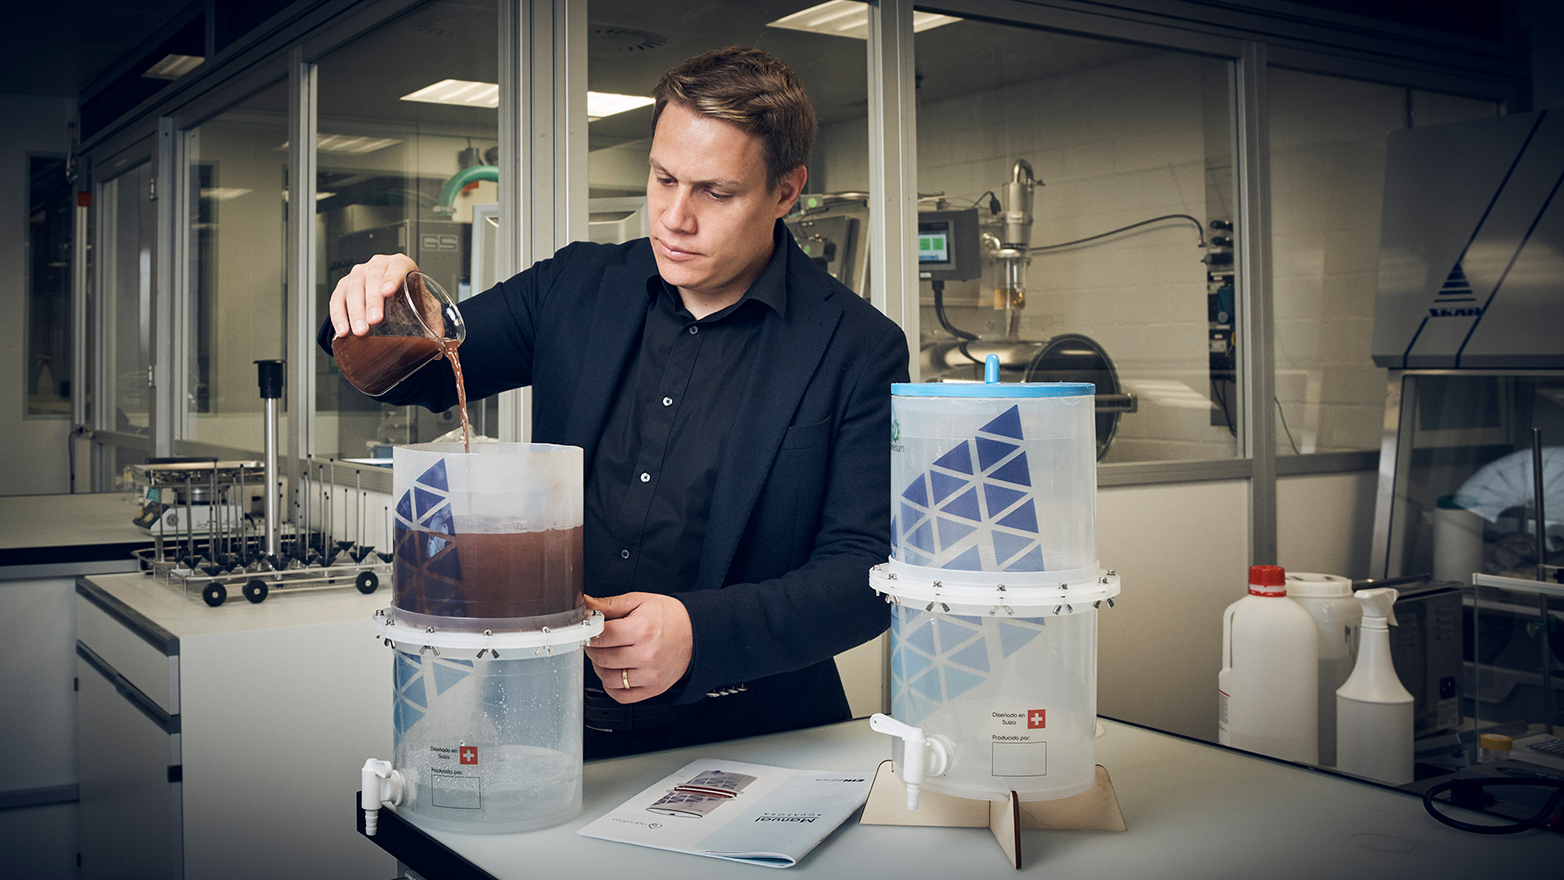 Olivier Gröninger demonstrates his water filter in the lab